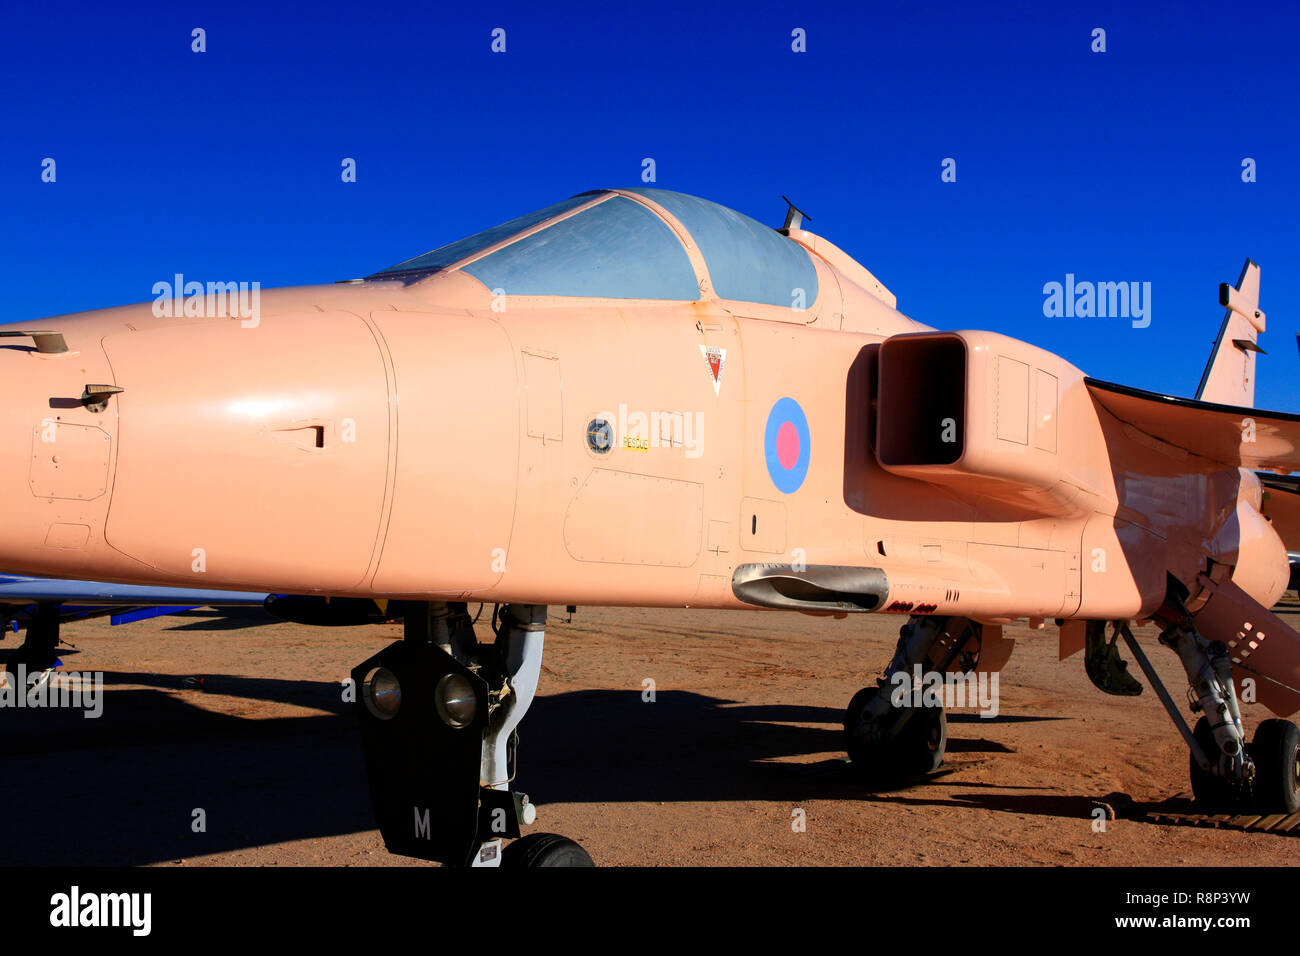 Desert-Pink RAF SEPECAT Jaguar GR1 fighter plane on display at the Pima Air & Space Museum in Tucson, AZ Stock Photo